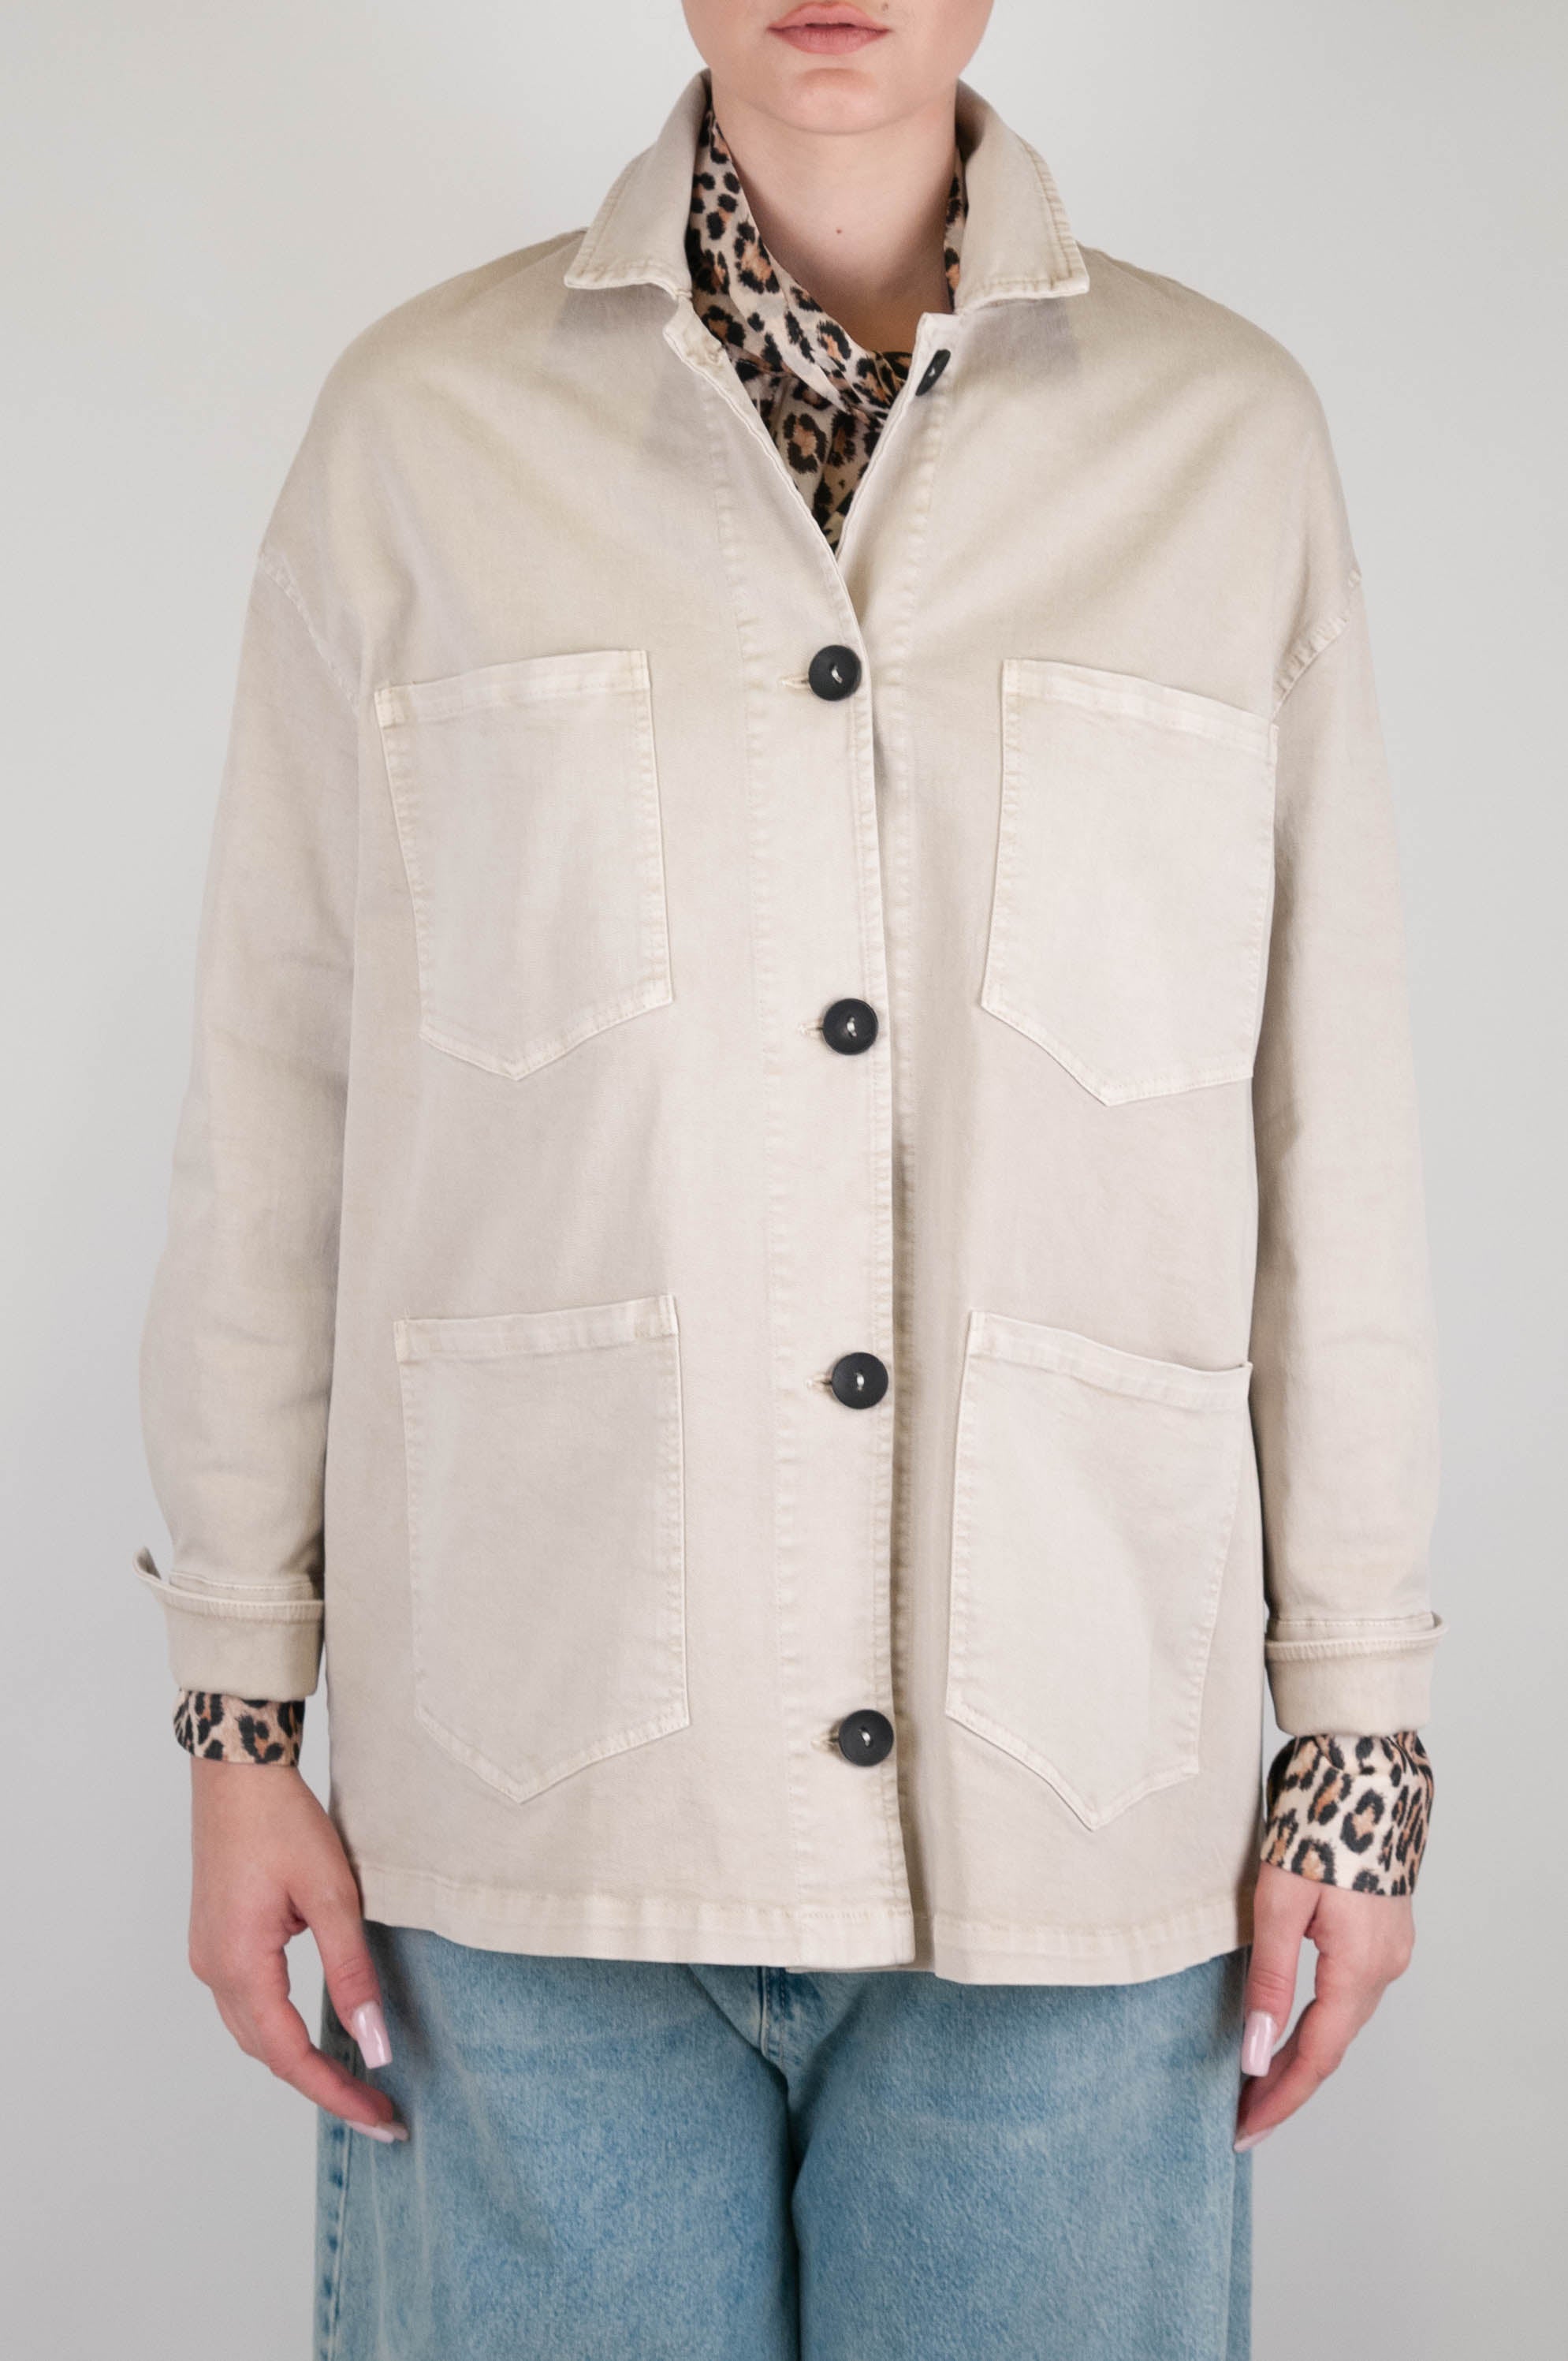 Souvenir - Saharan jacket with four front pockets